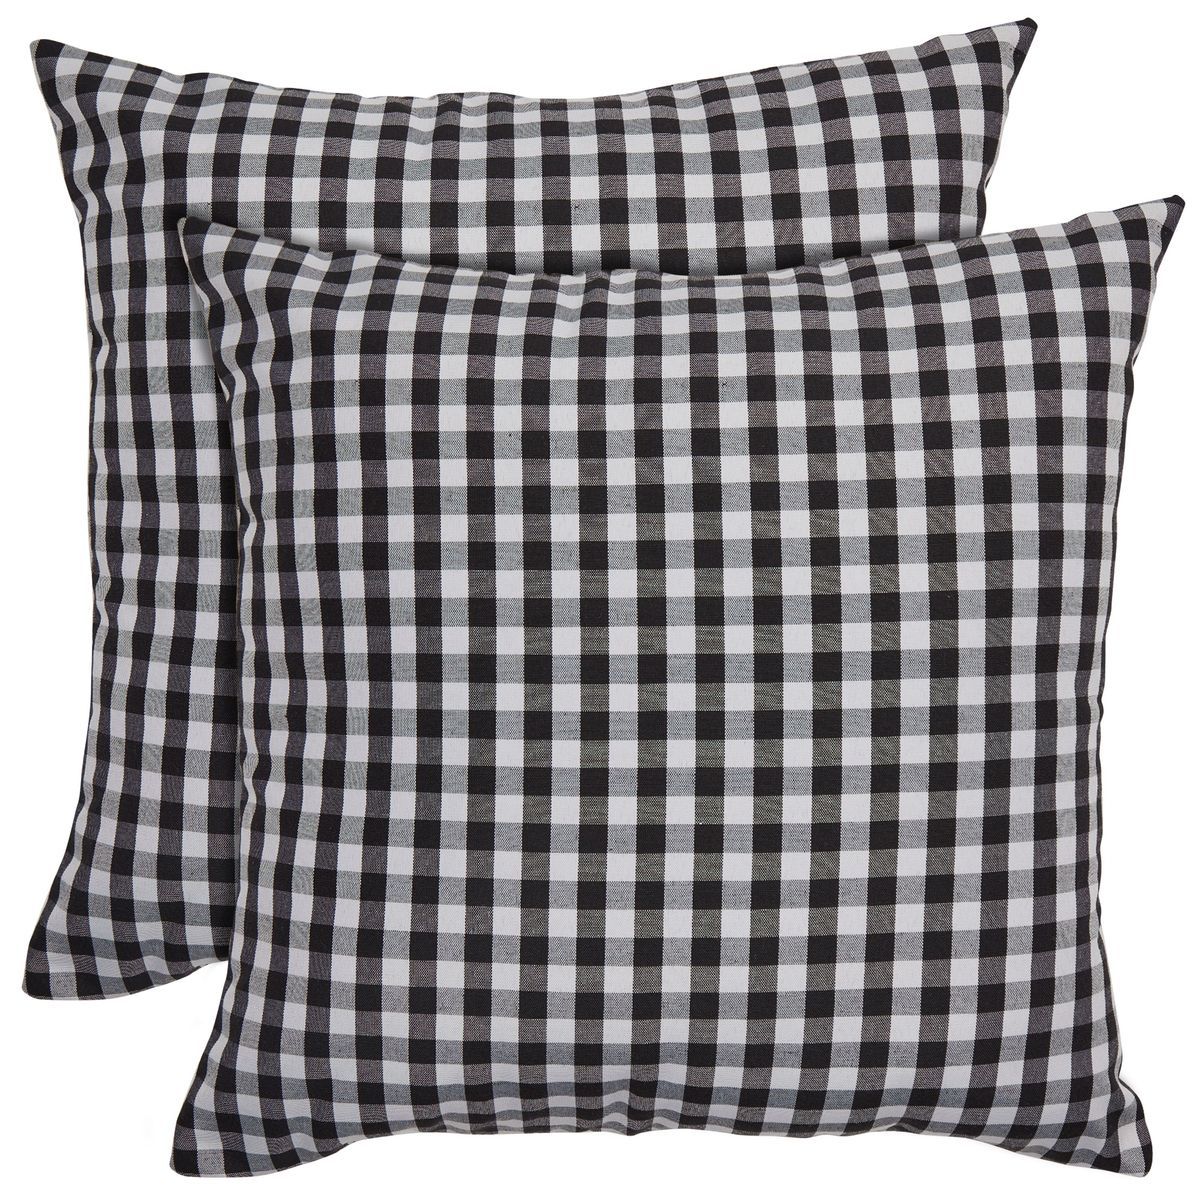 Farmlyn Creek 2 Pack Decorative Throw Pillow Covers 20x20 in, Black & White Buffalo Plaid | Target